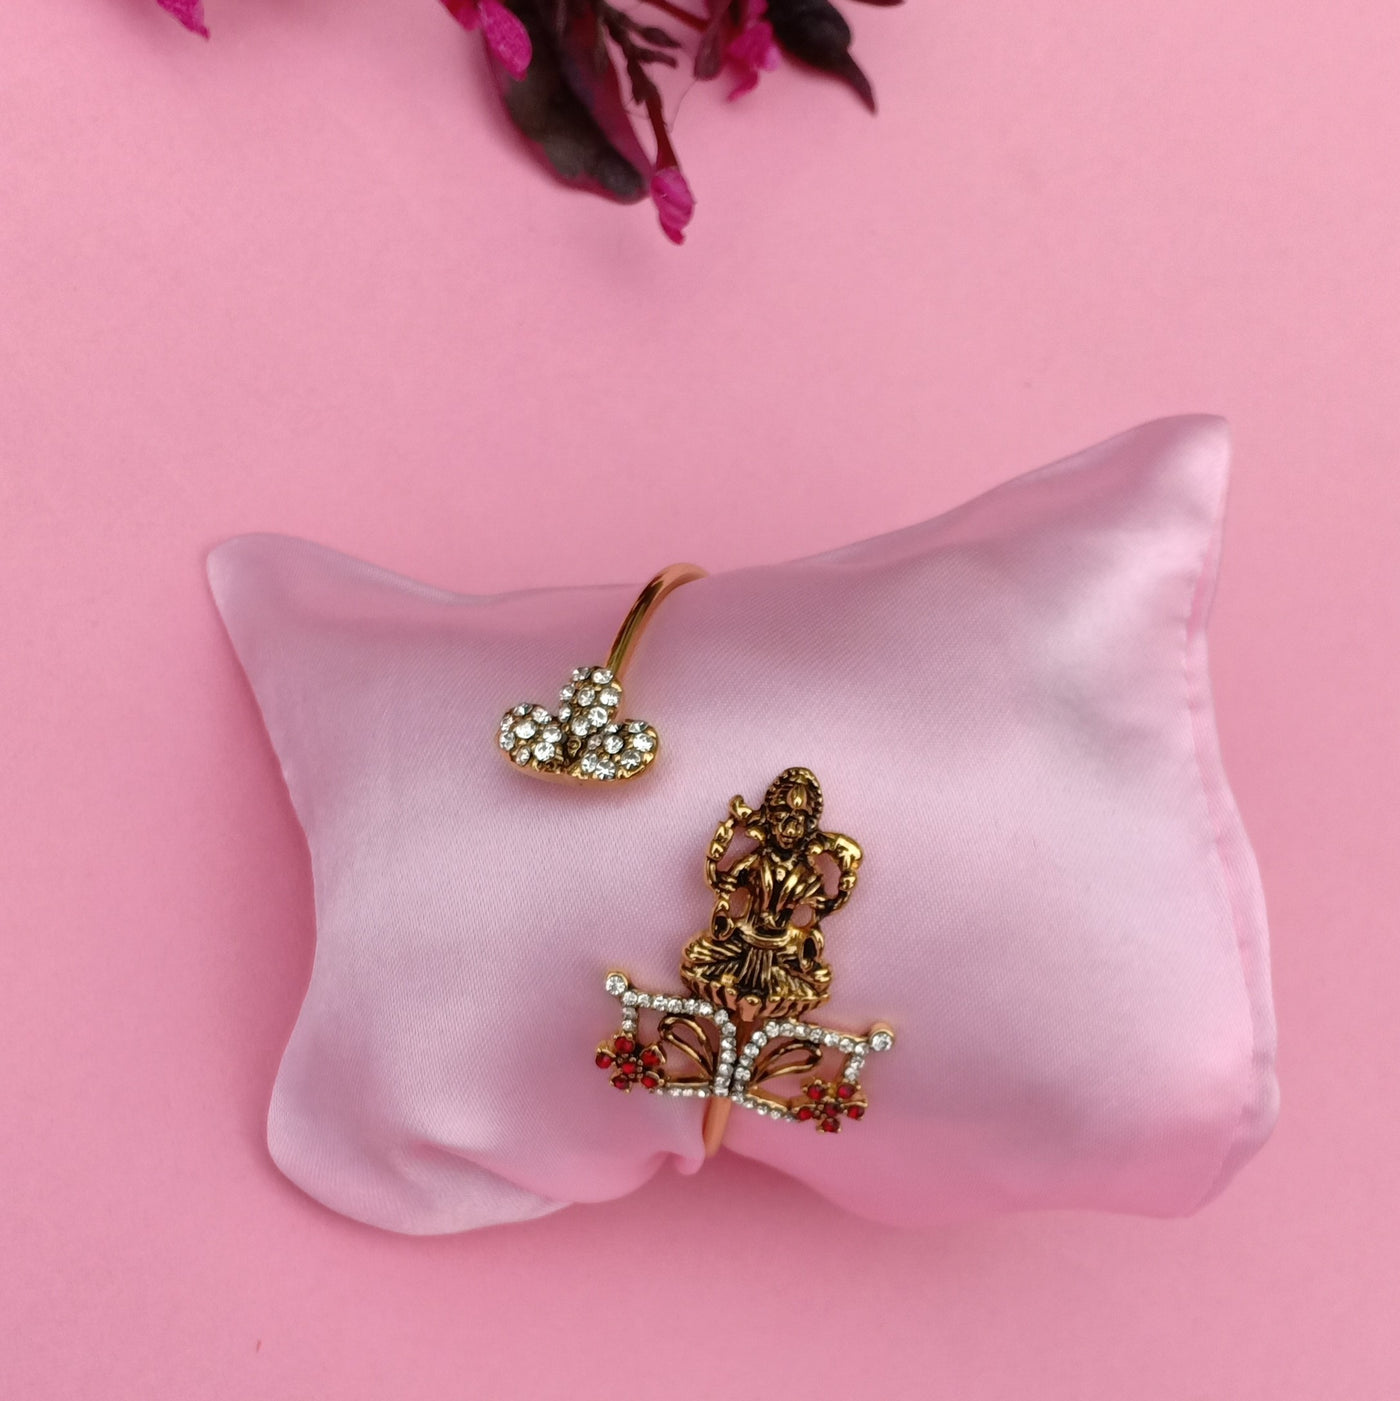 Estele Gold Plated Antique Adorable Laxmi Bracelet with Austrian Crystals & Ruby Stones for Women